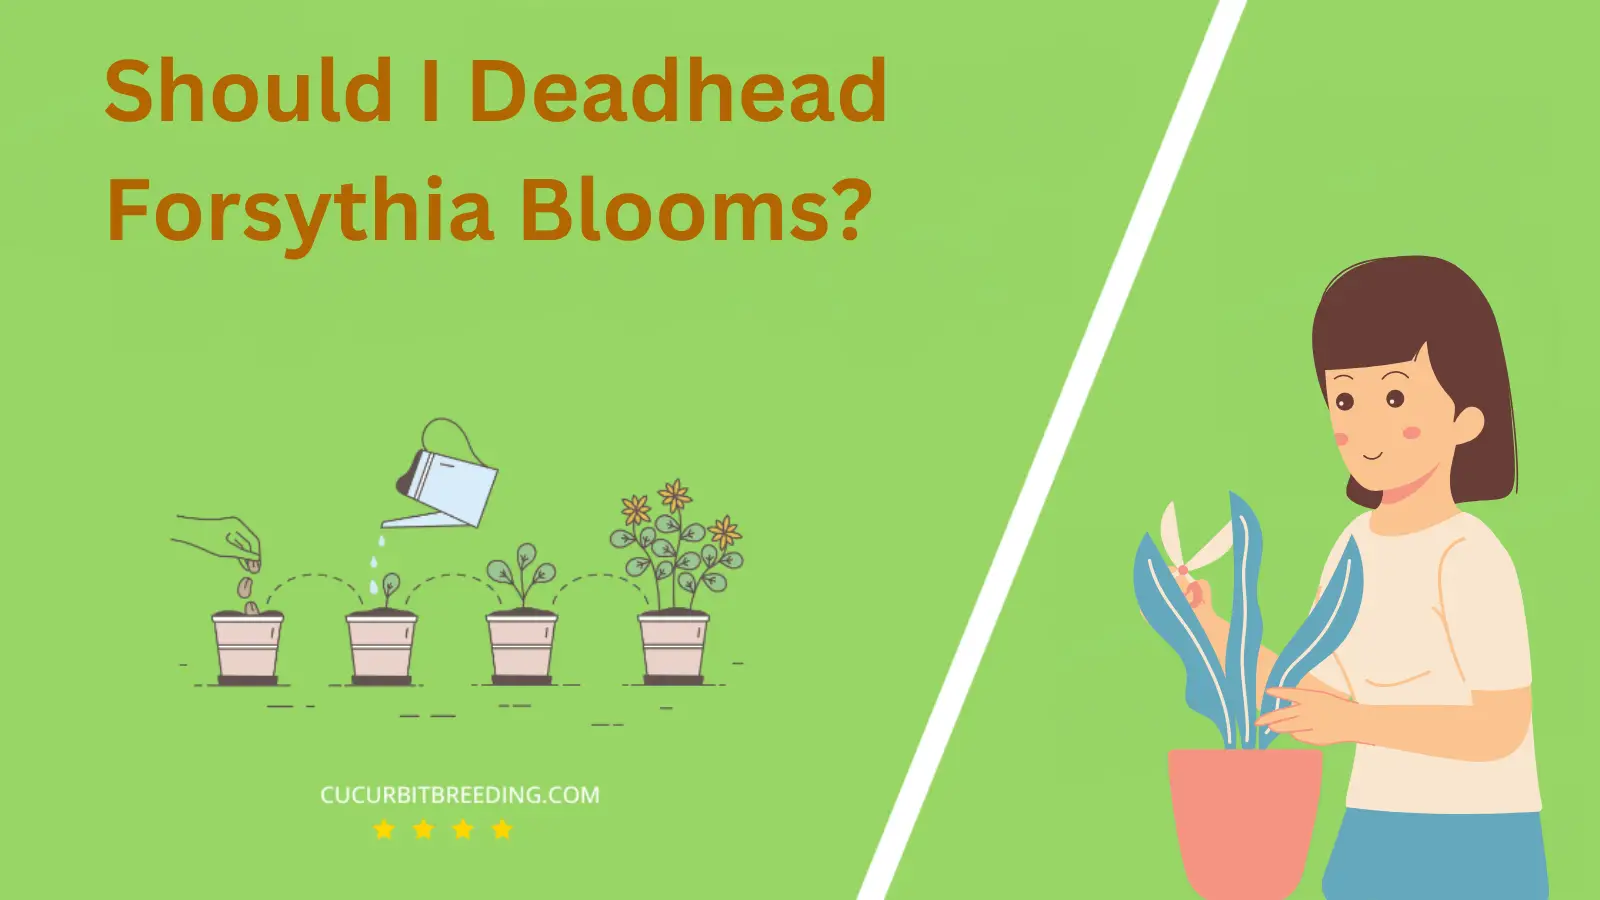 Should I Deadhead Forsythia Blooms?